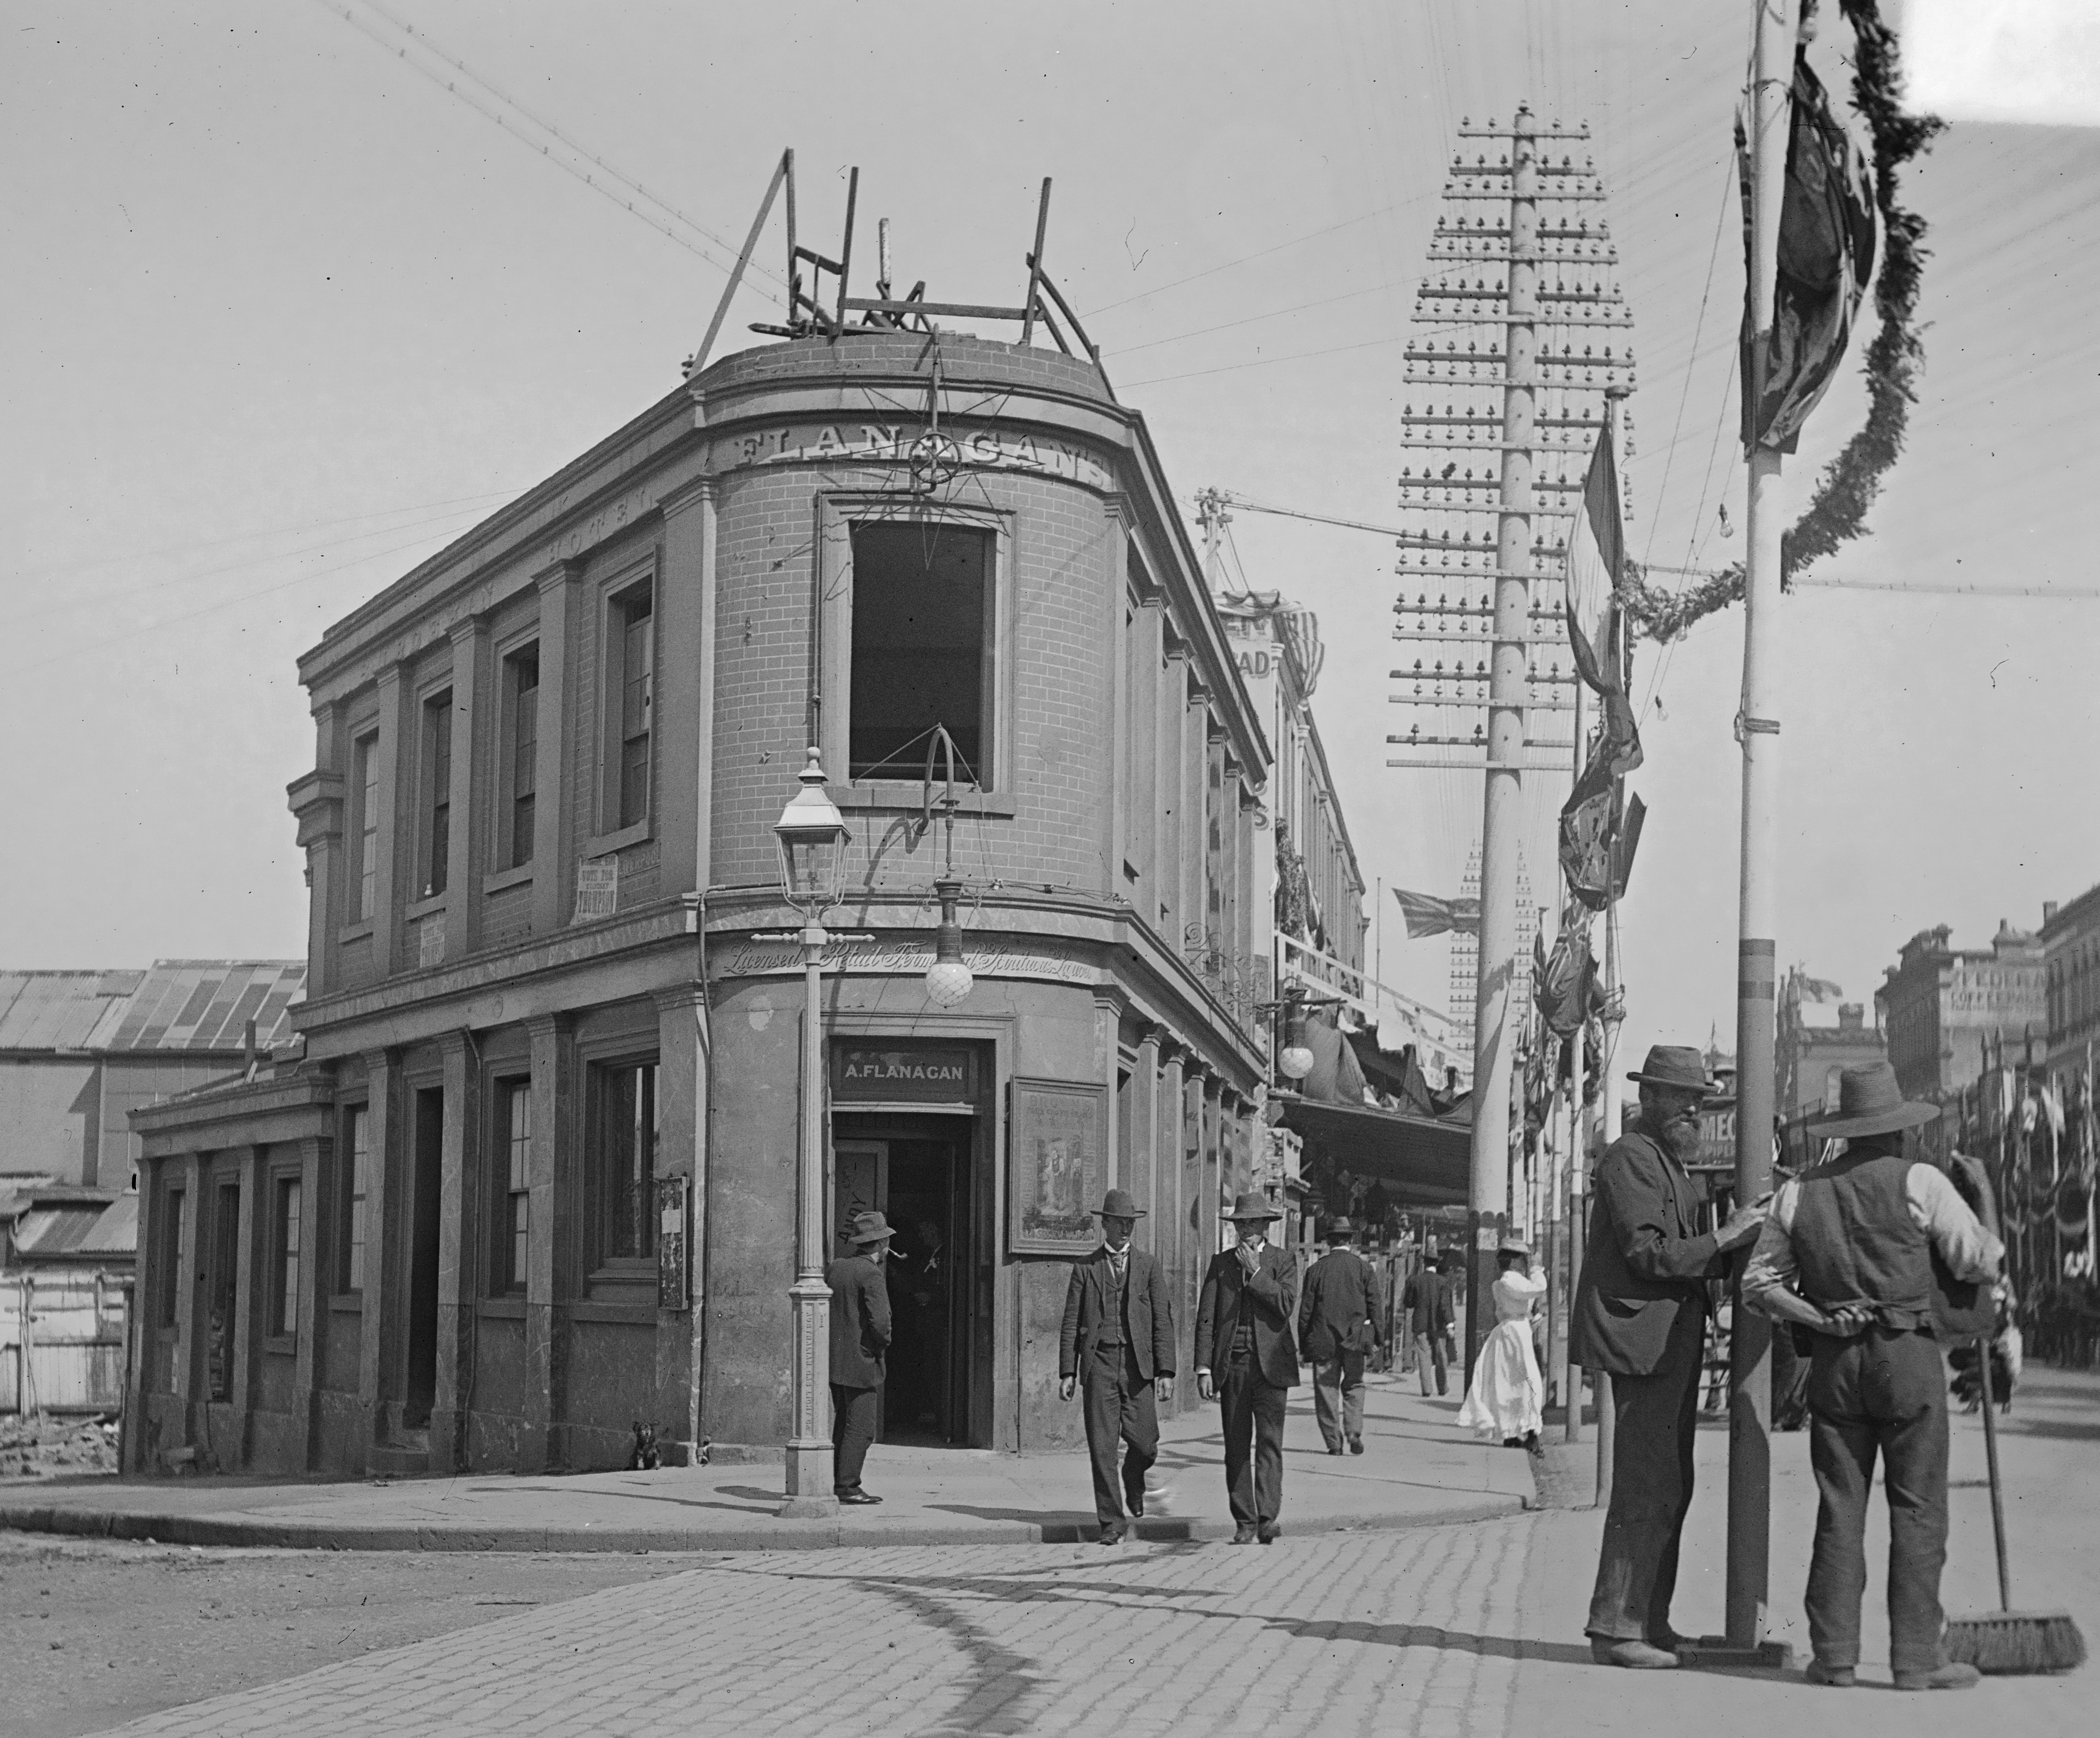 Photograph showing pub on a corner